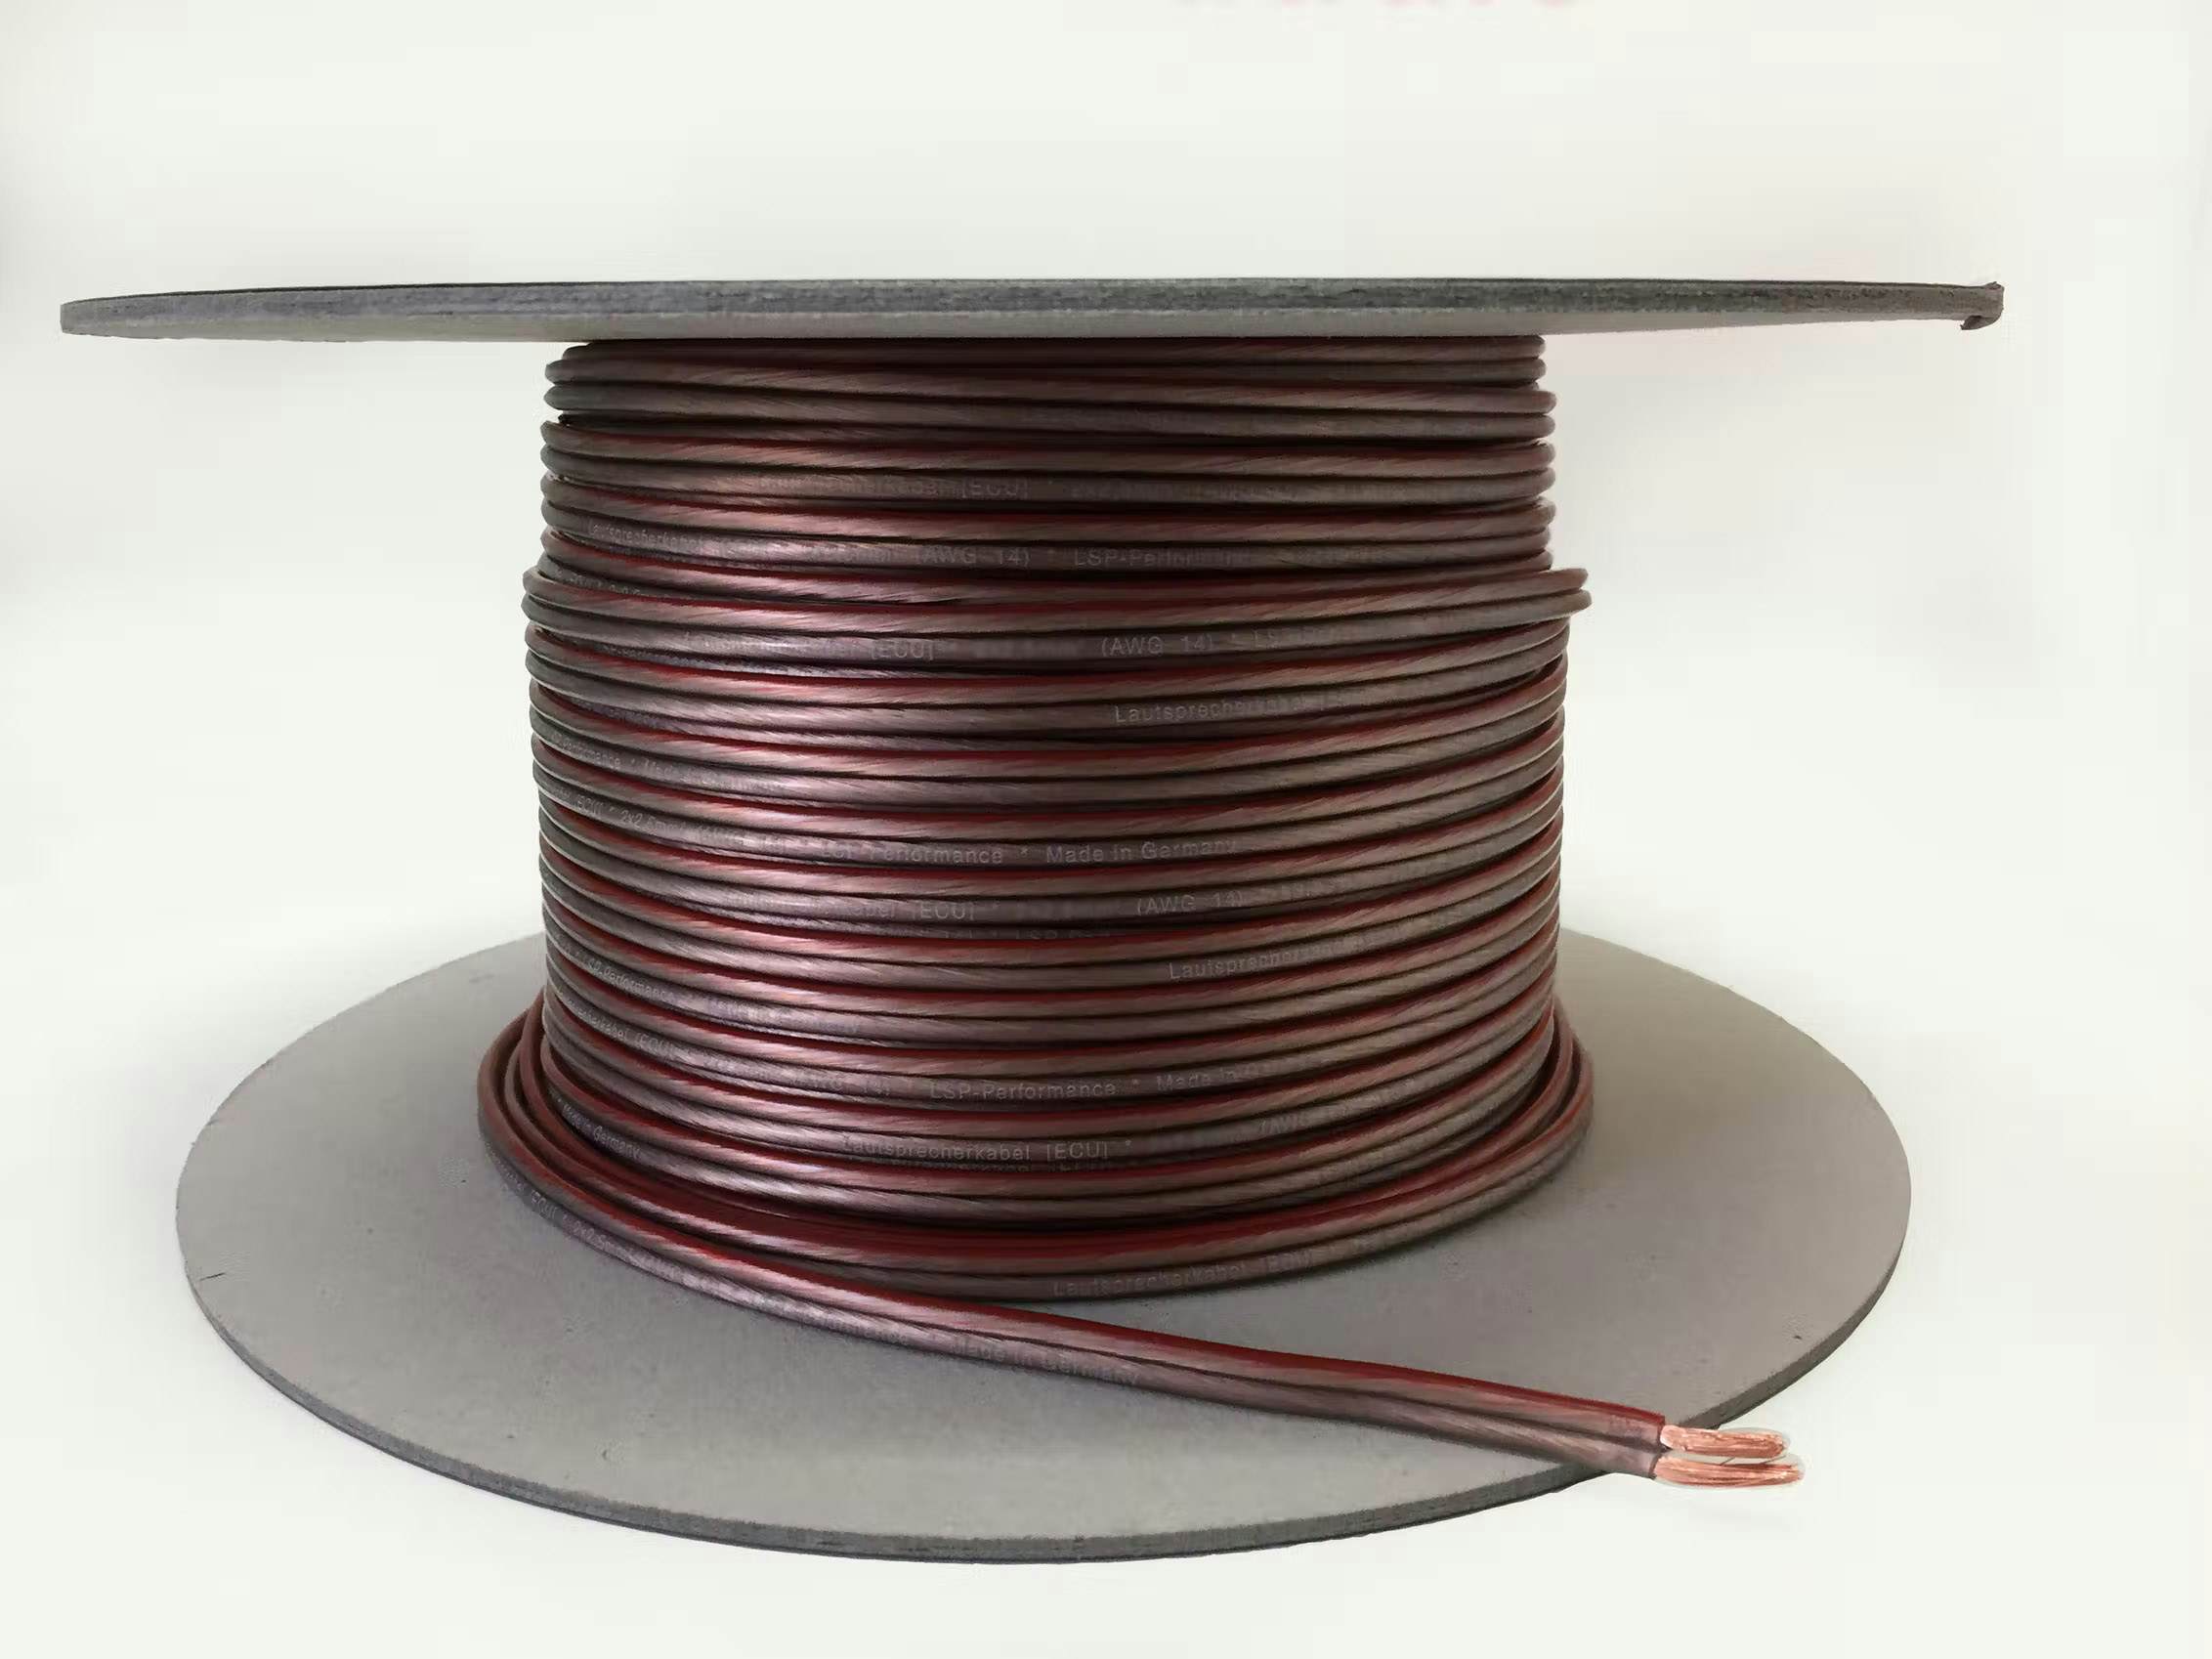 Zvočniški kabel 2 x 4 mm - High Quality OFC Copper